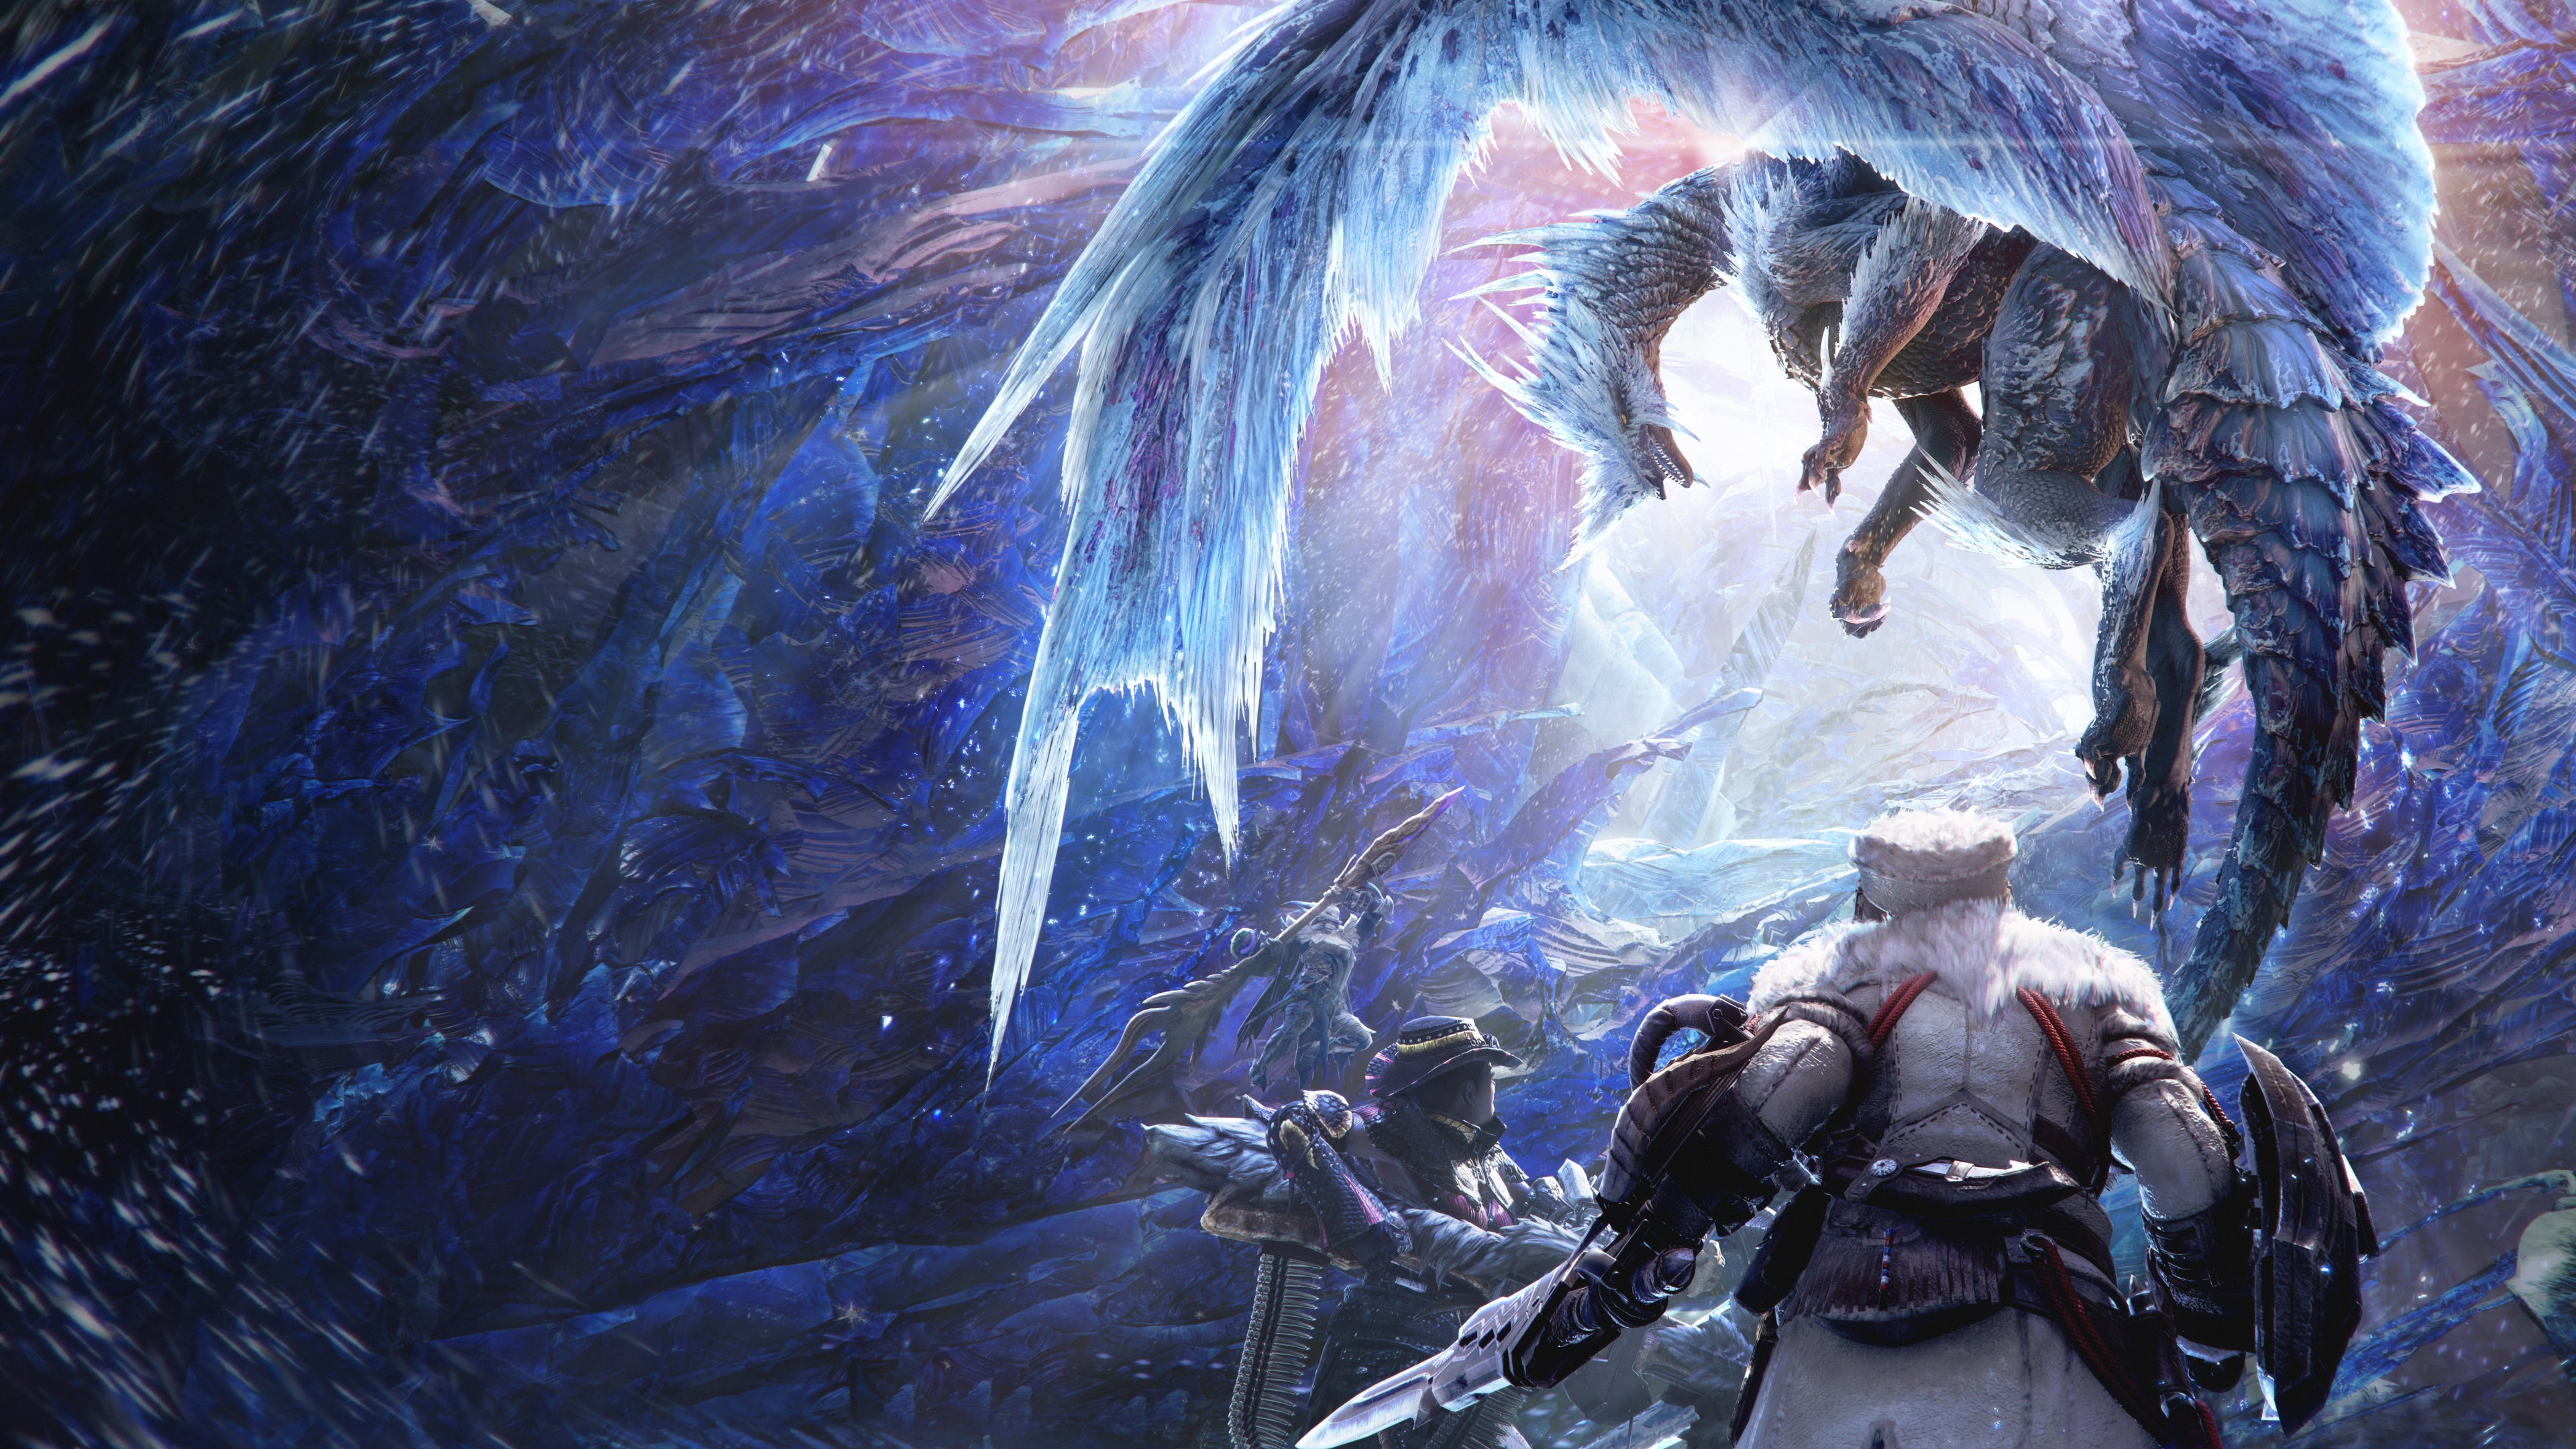 Monster Hunter World: Iceborne — Edycja Mistrzowska